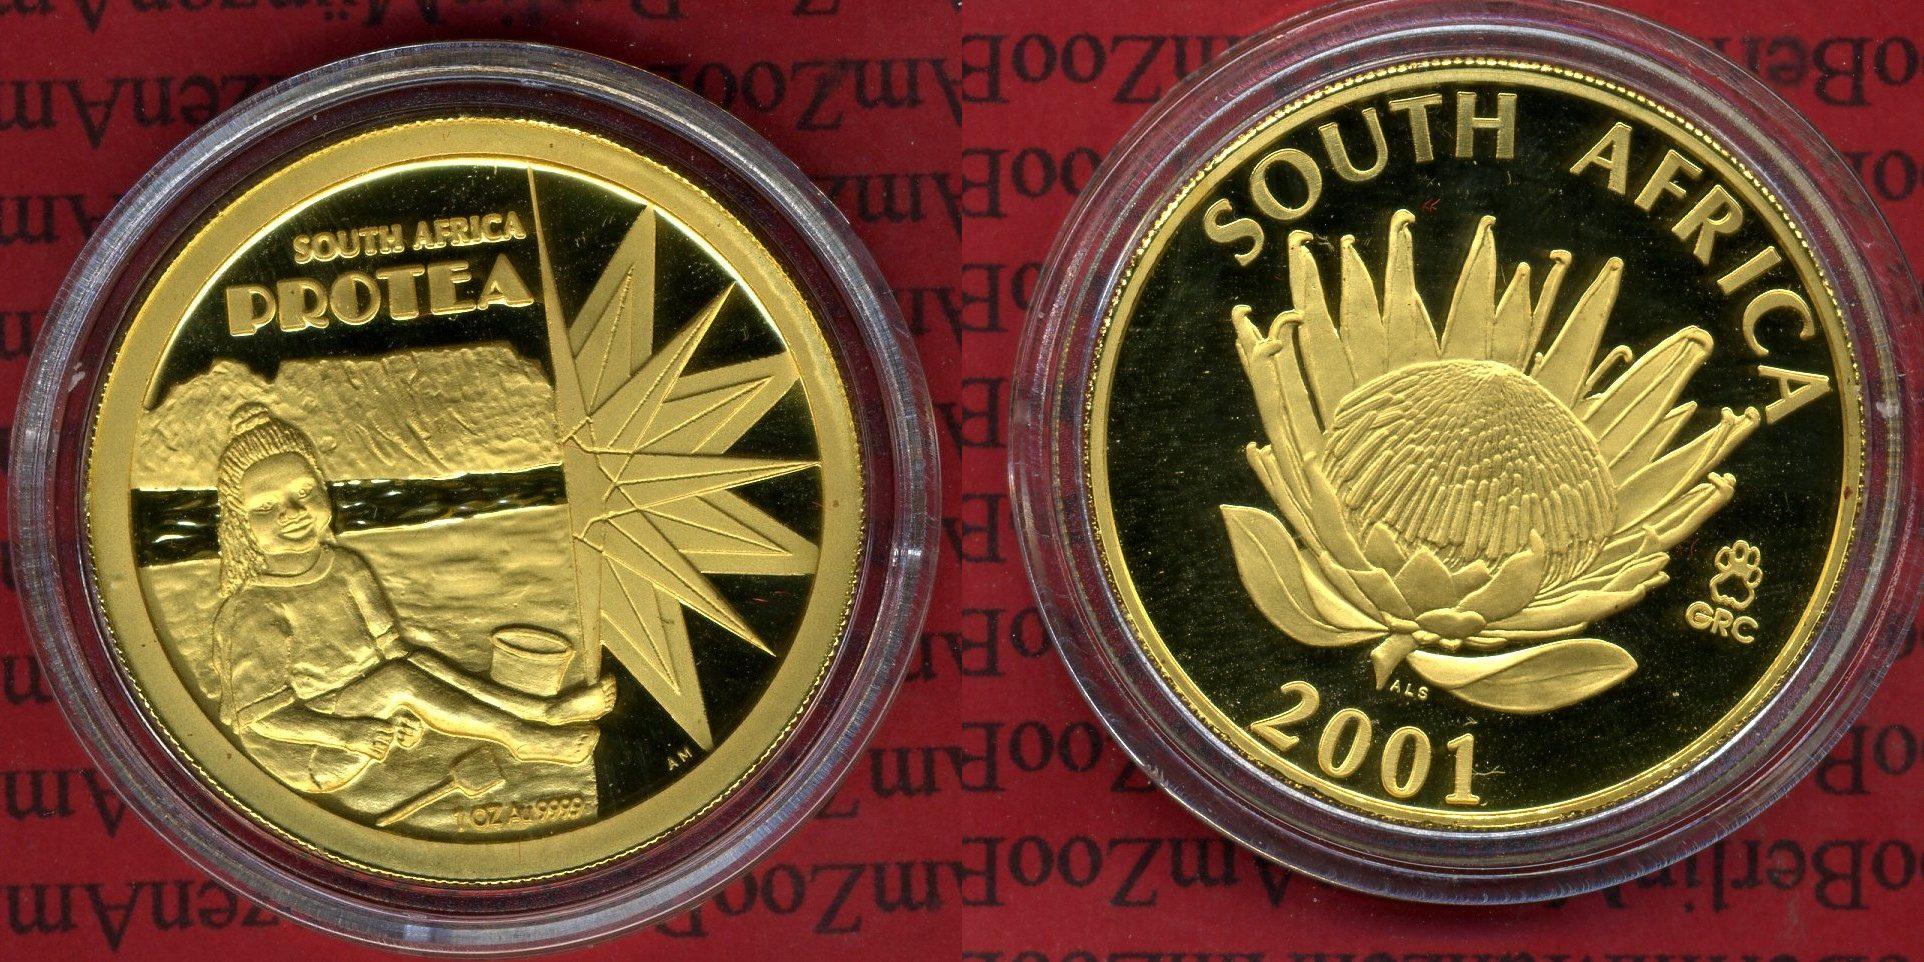 Foto Süd Afrika 1 Unze Protea Gold m Mintmark 2001 foto 142303